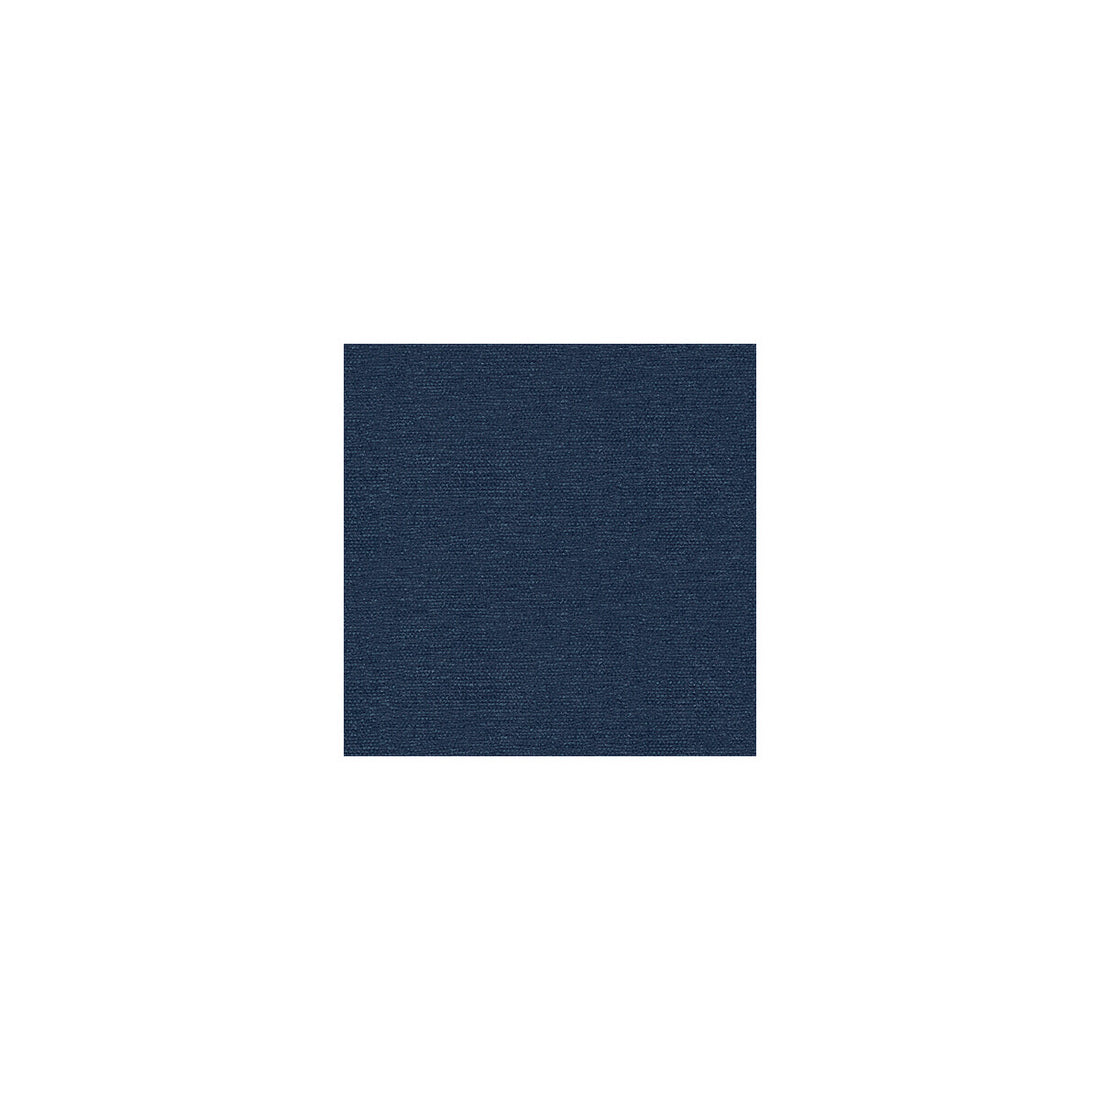 Kravet Smart fabric in 26837-5 color - pattern 26837.5.0 - by Kravet Smart